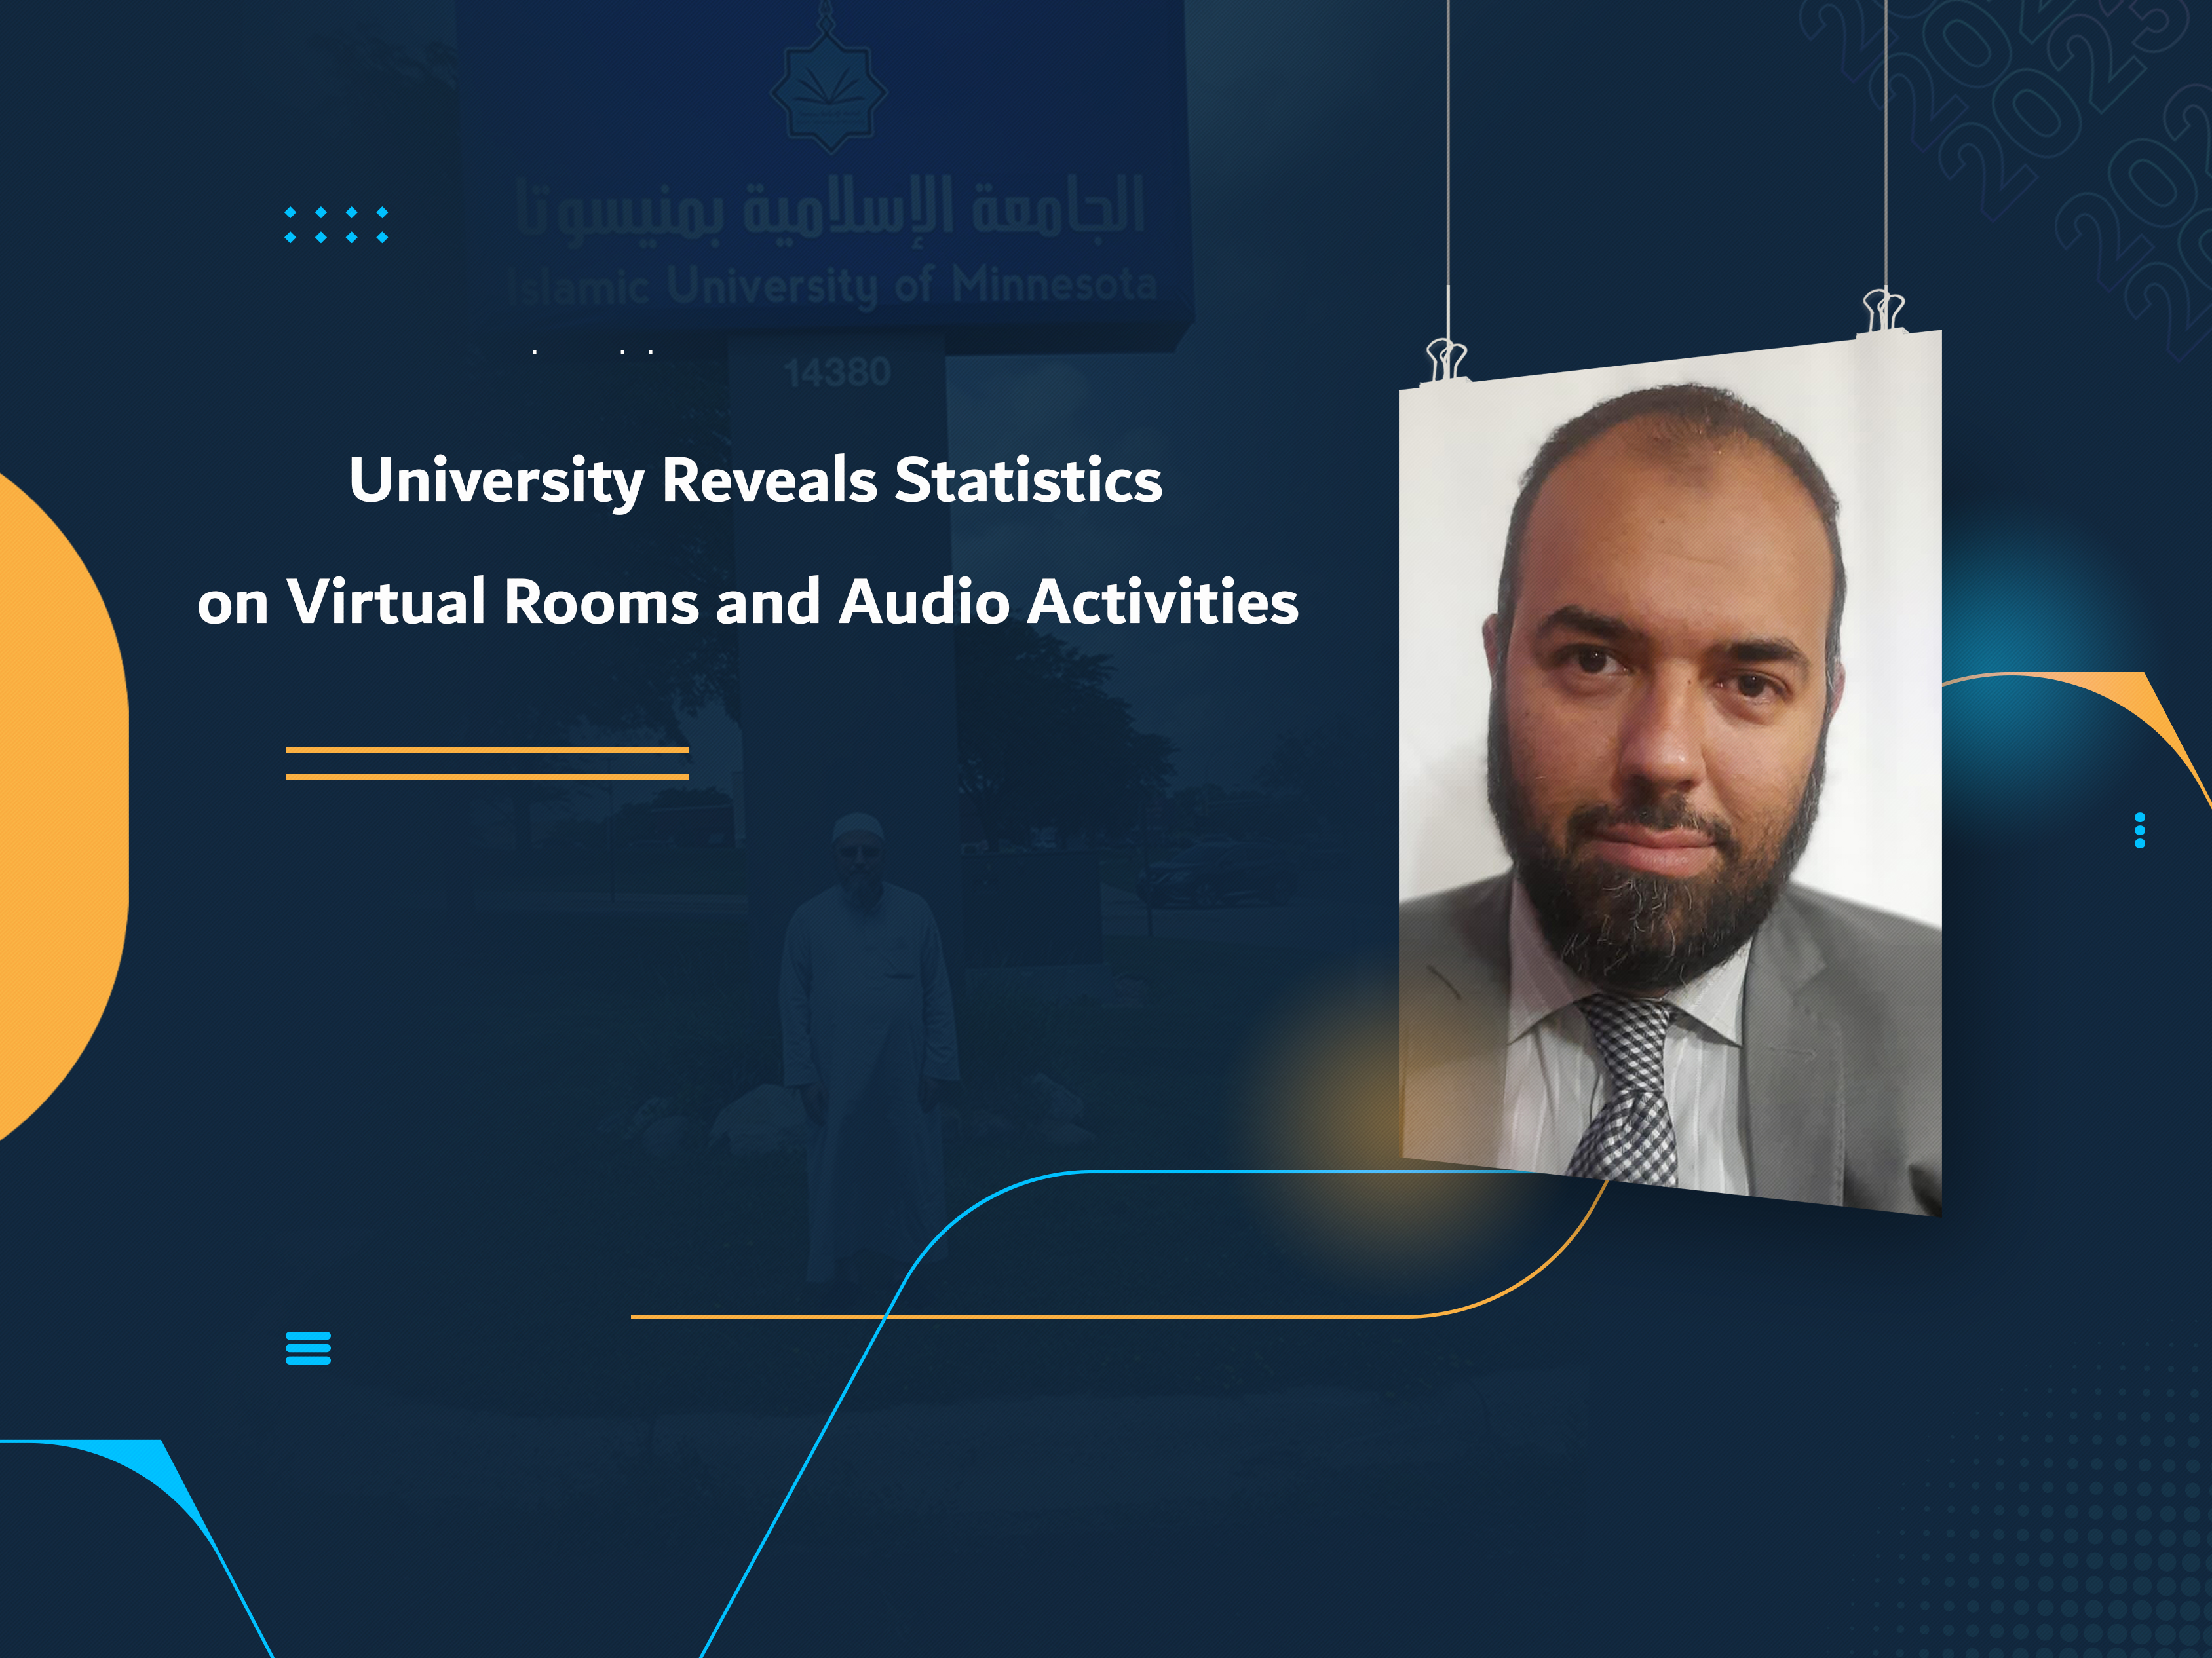 University Reveals Statistics on Virtual Rooms and Audio Activities